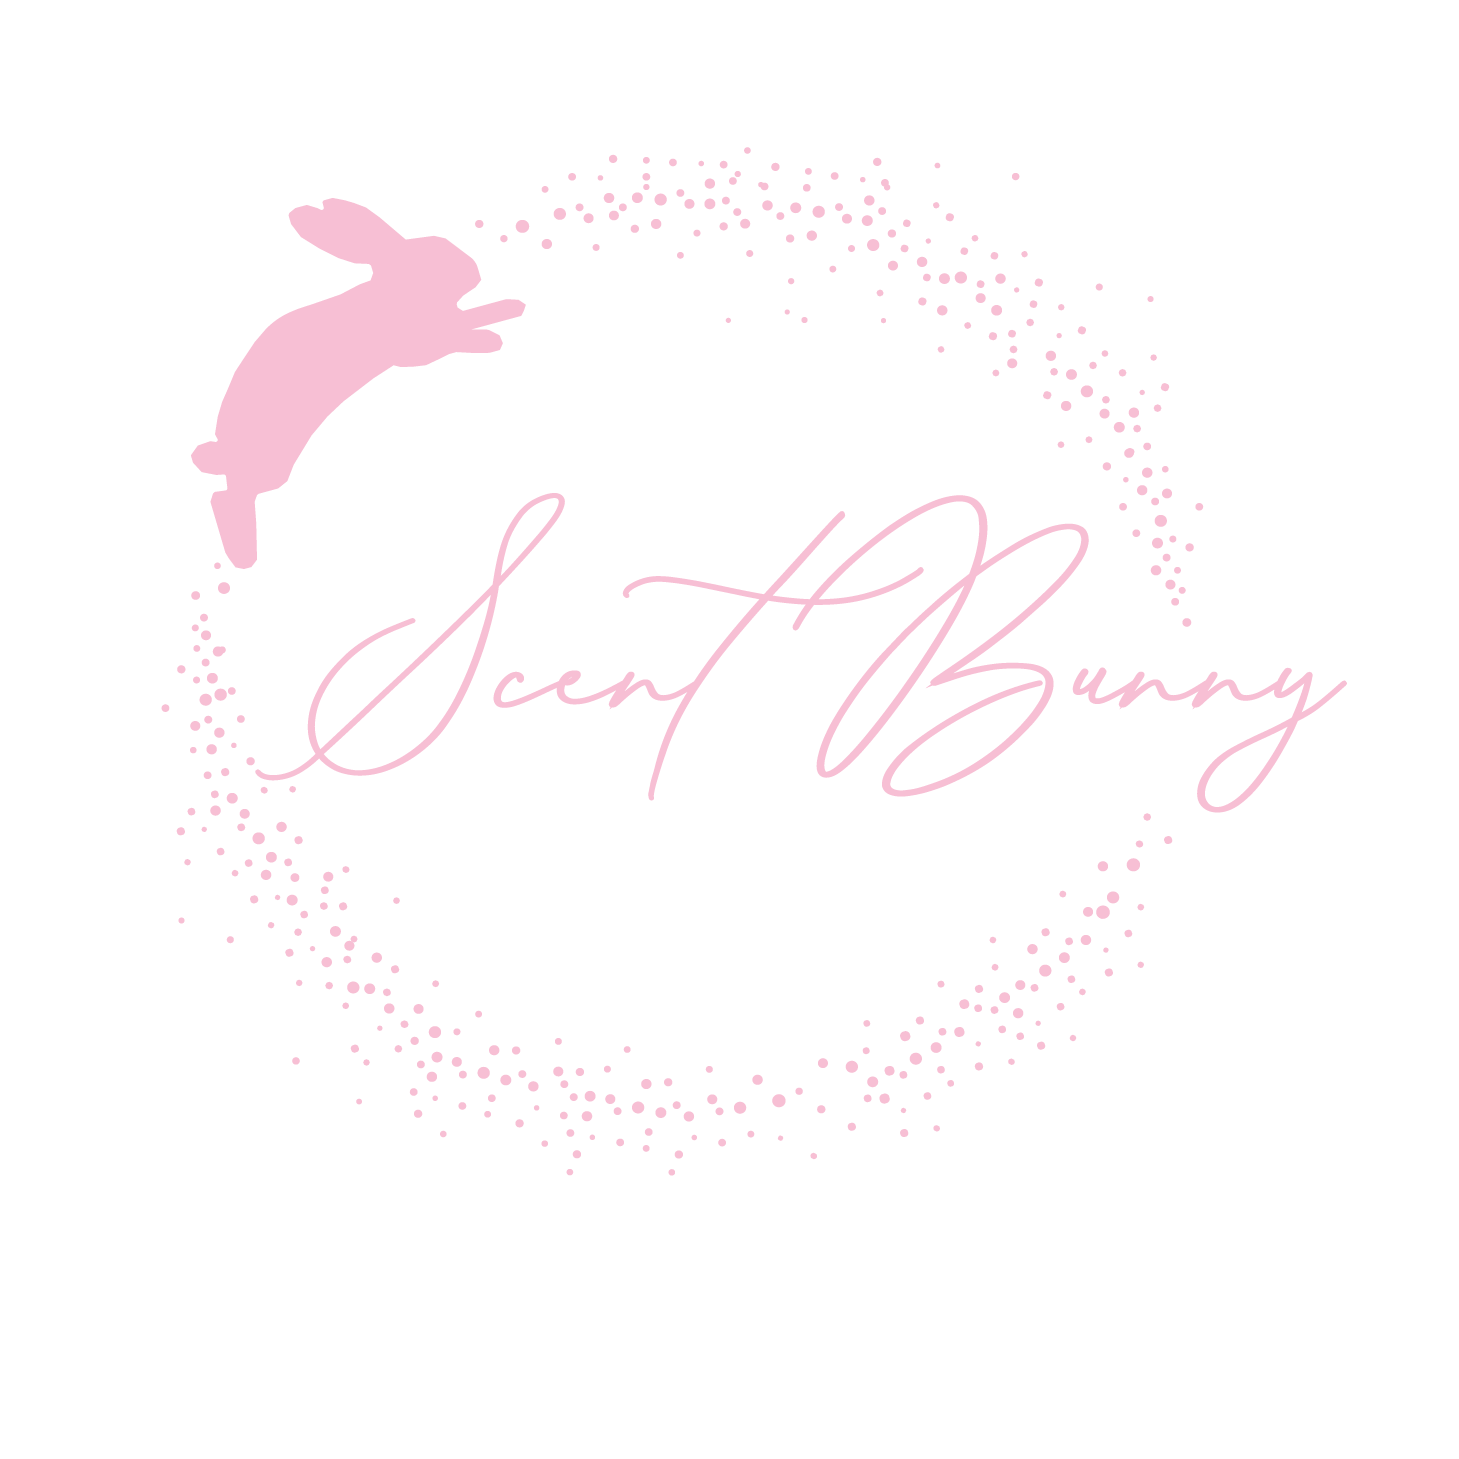 Scent Bunny